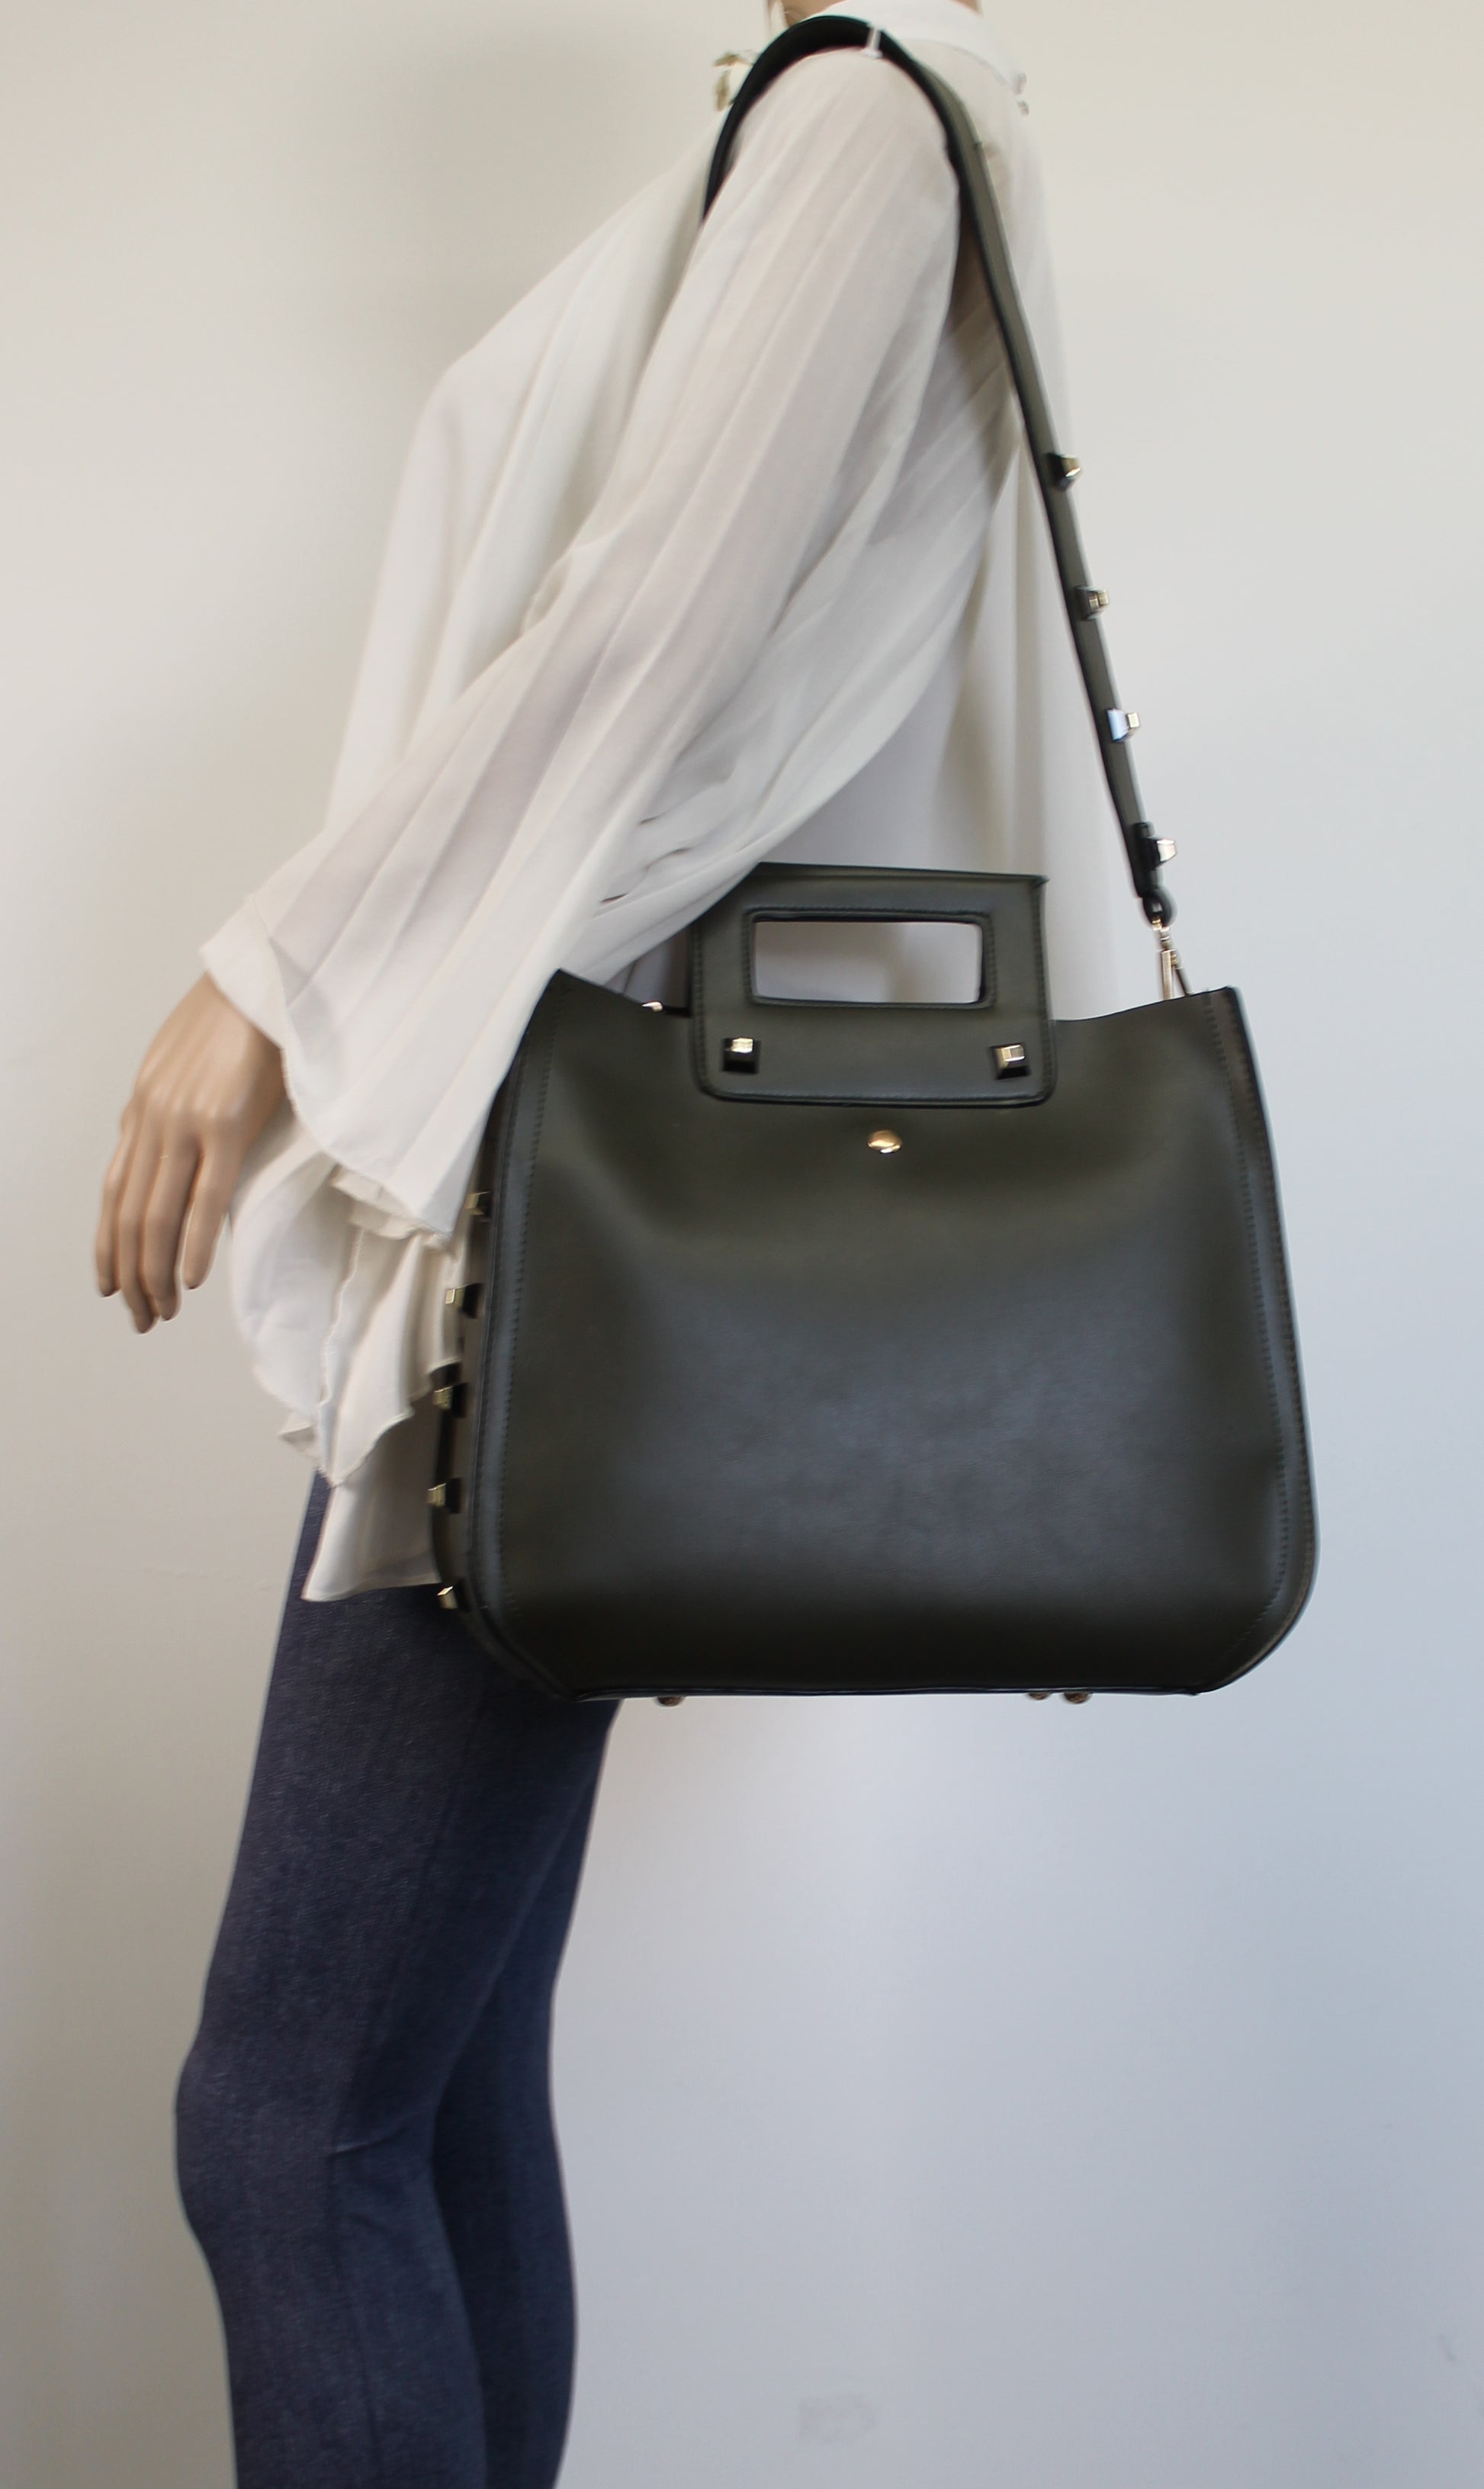 Buy your Angela Handbag Khaki Today! Buy with confidence from Swankyswans